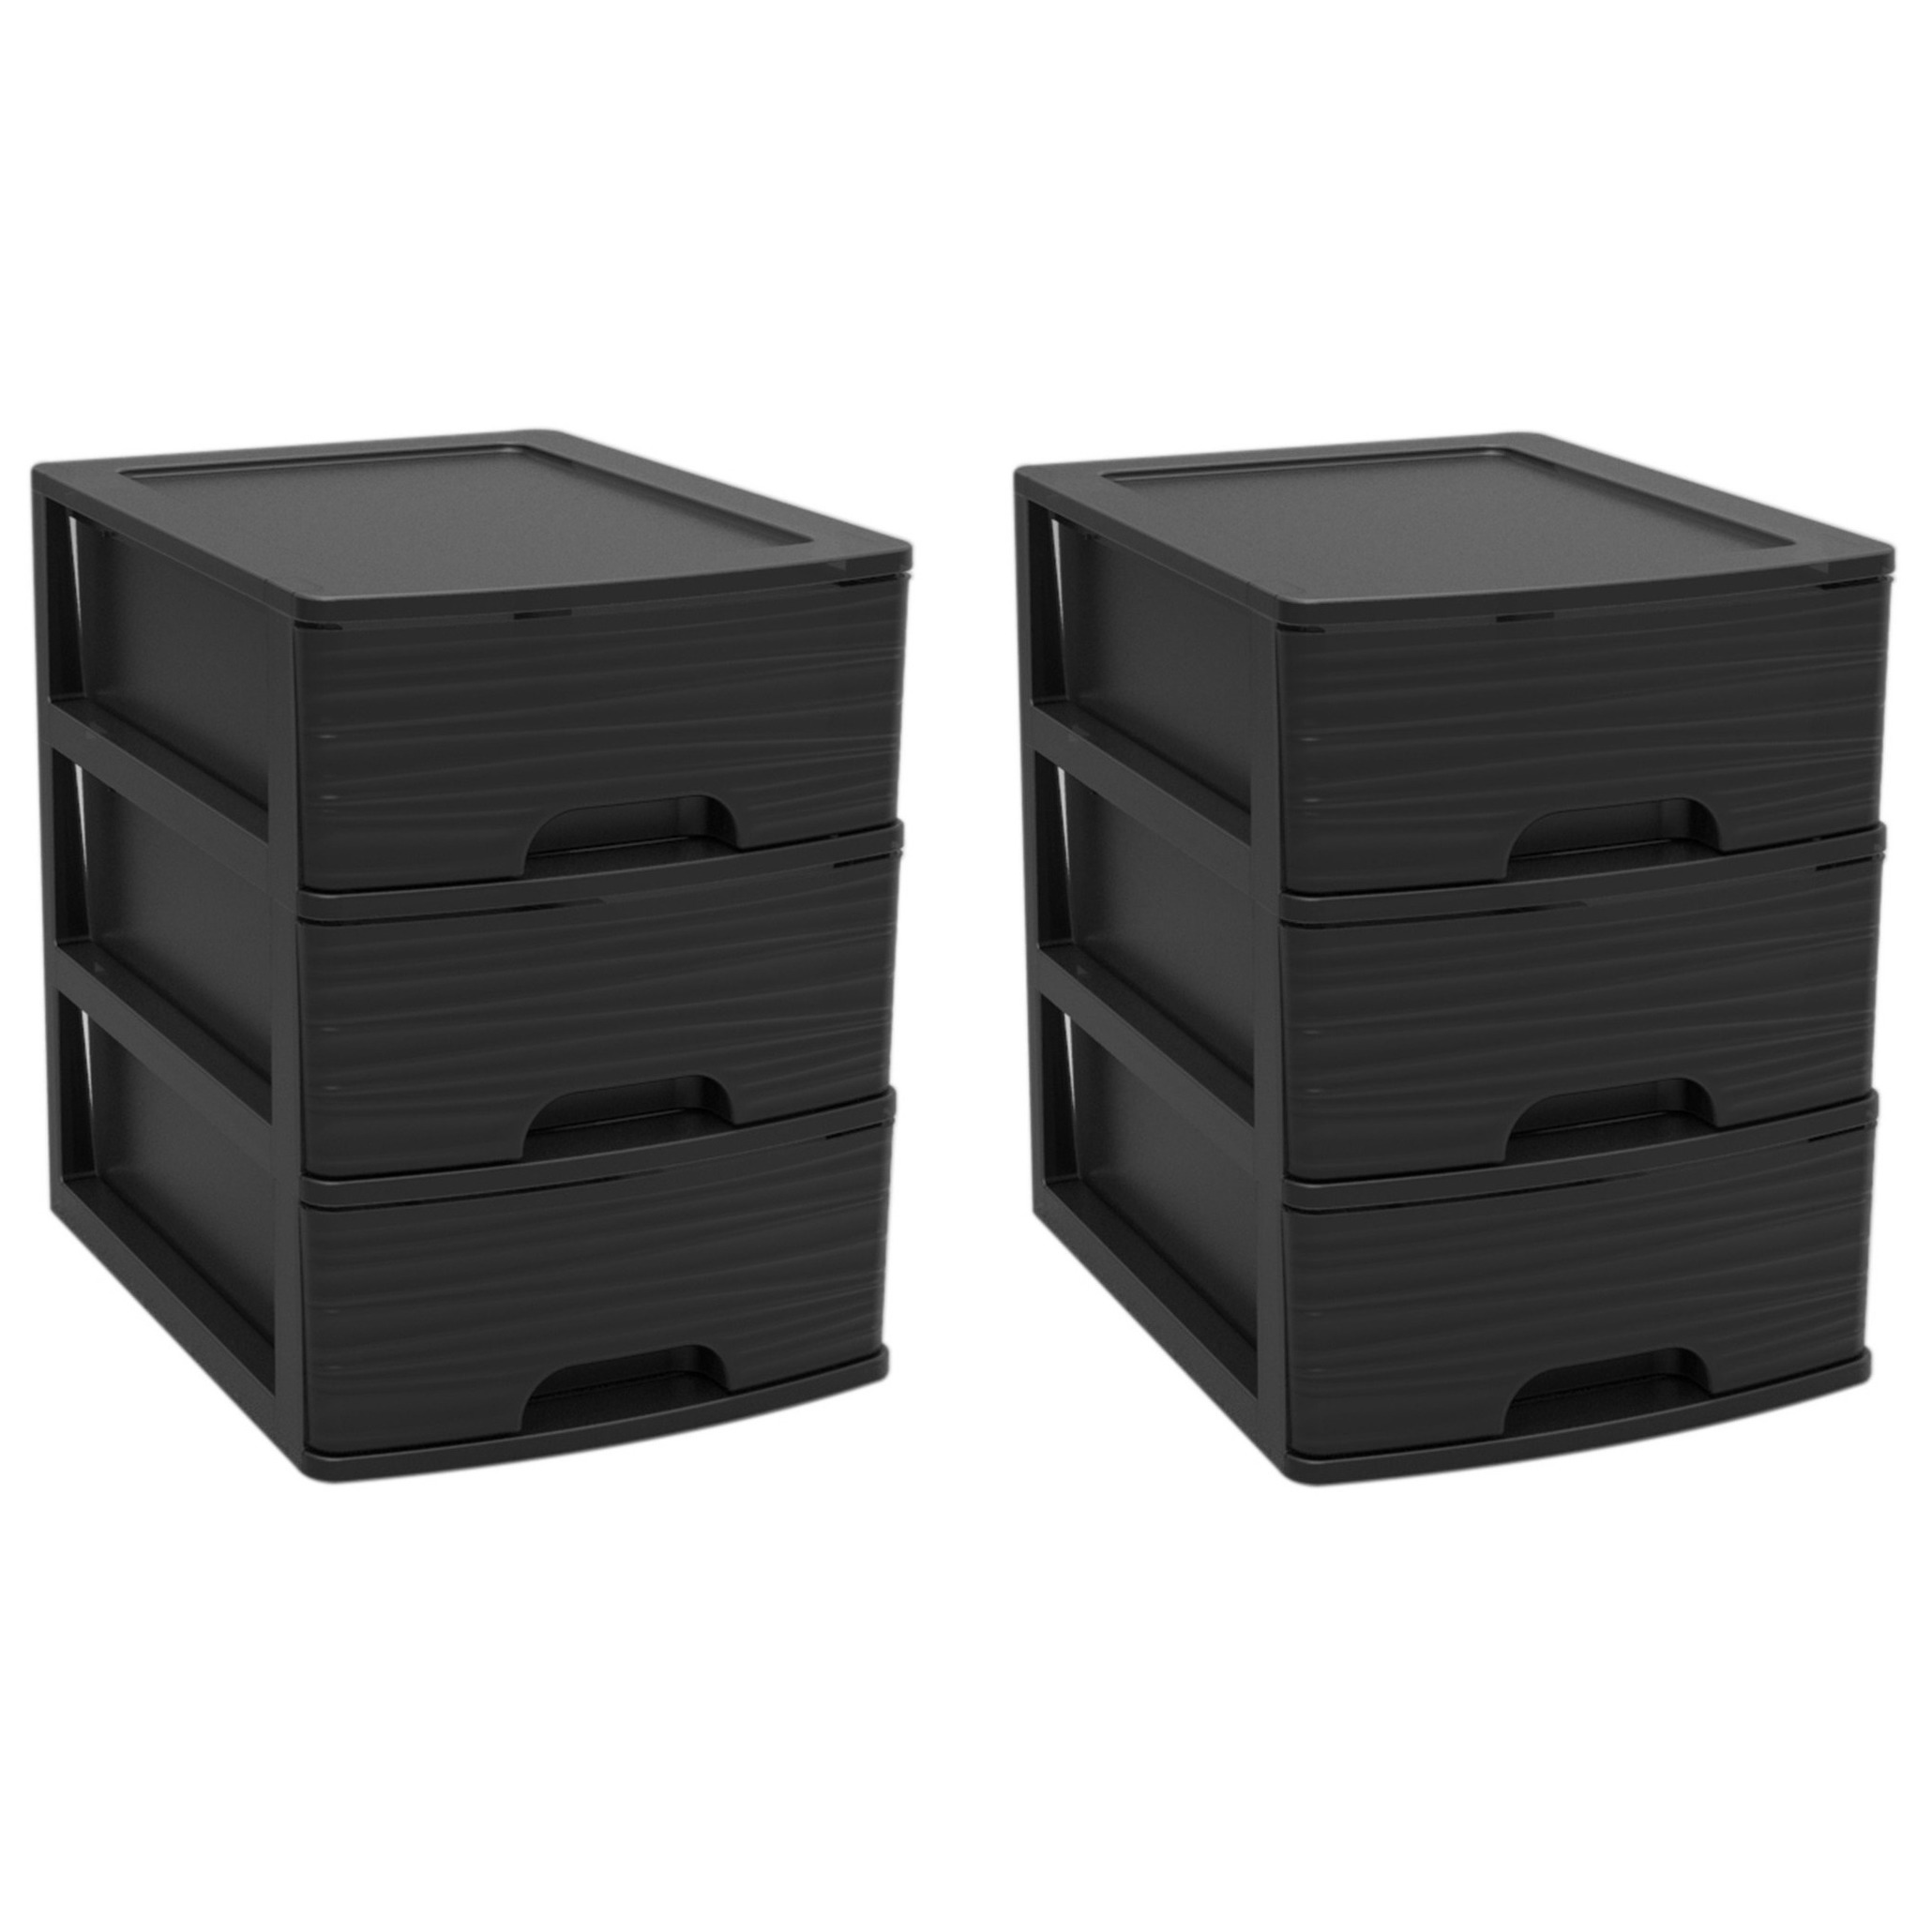 3x stuks ladenkast-bureau organizers zwart A5 3x lades stapelbaar L19 x B26 x H25 cm